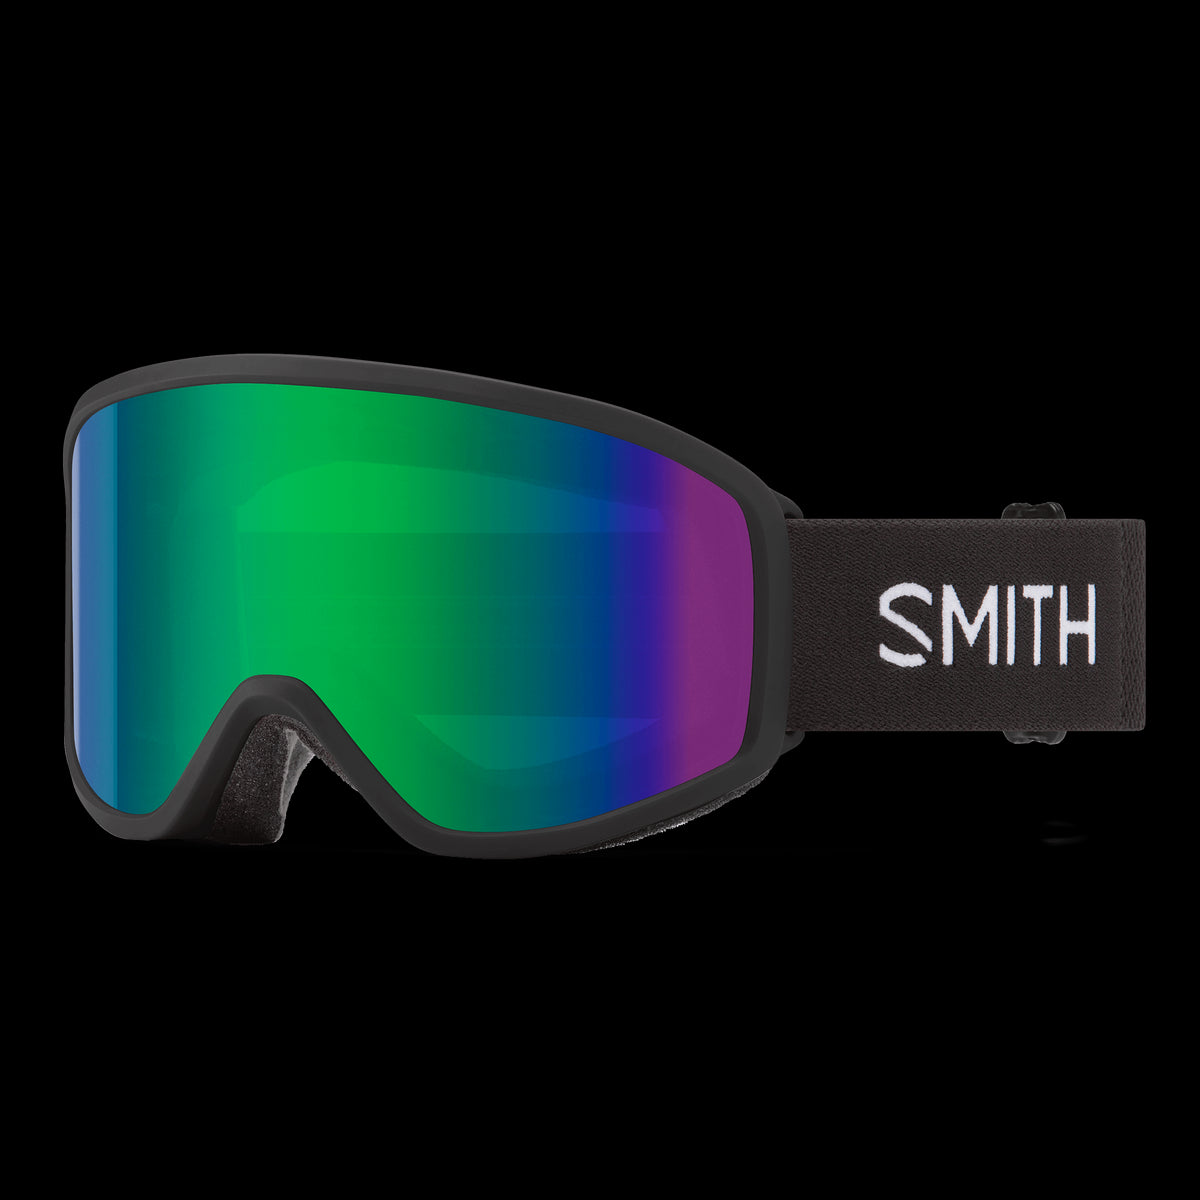 Smith Lunettes de Ski Drift Femme – Oberson